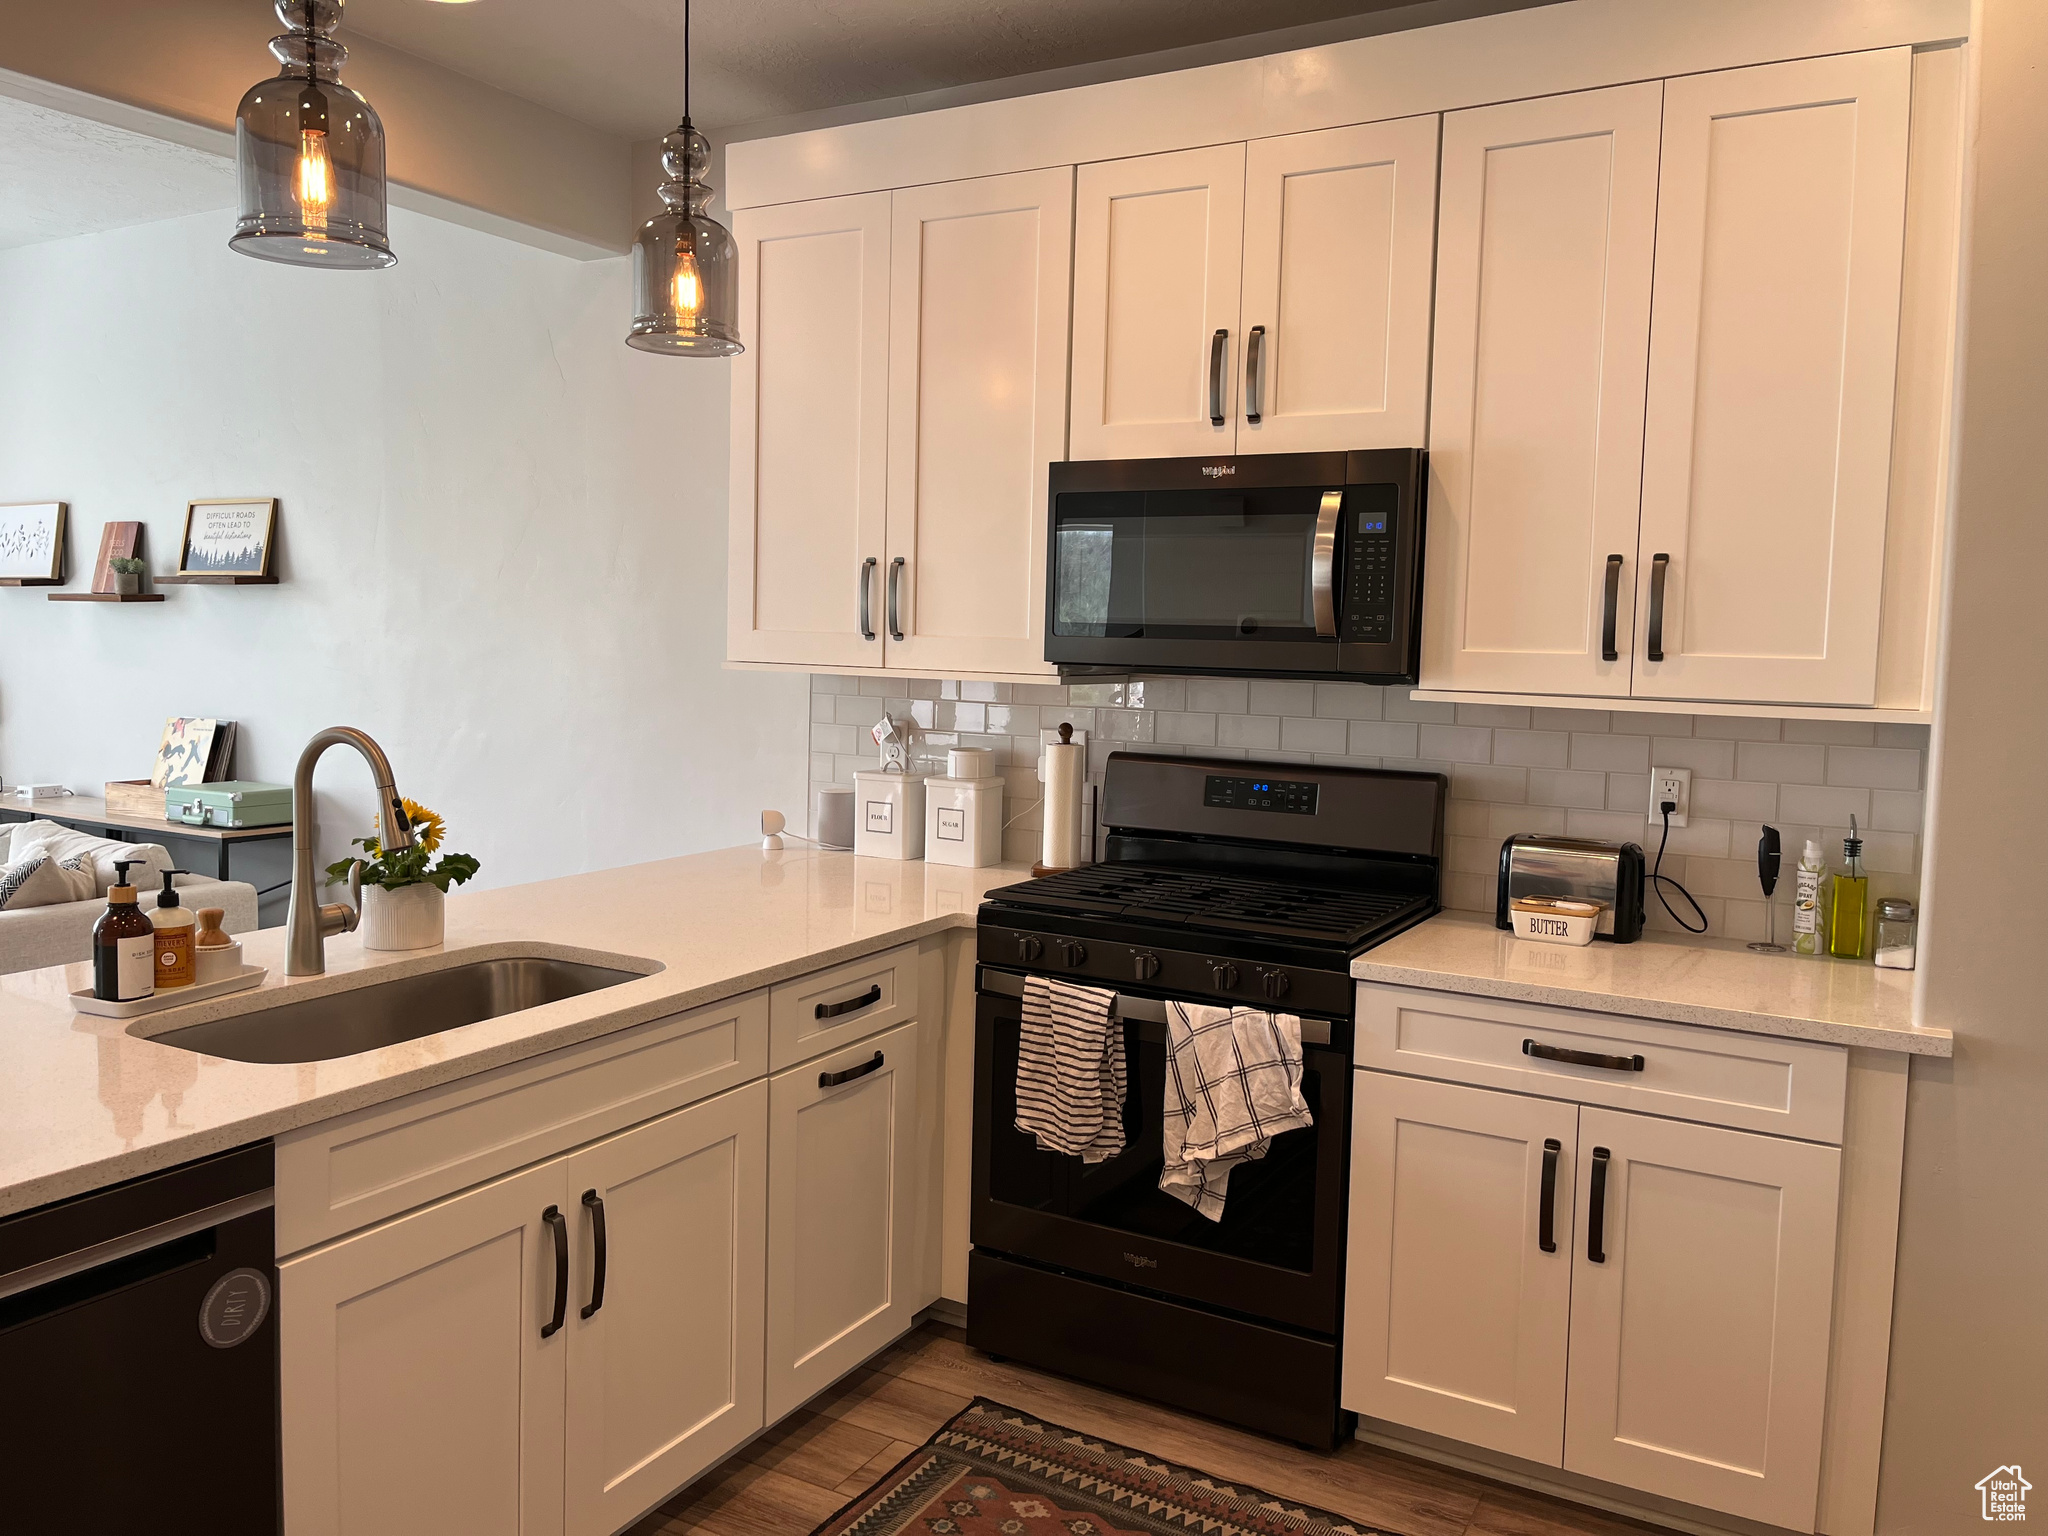 Kitchen with hanging light fixtures, dark hardwood / wood-style flooring, black appliances, backsplash, and sink